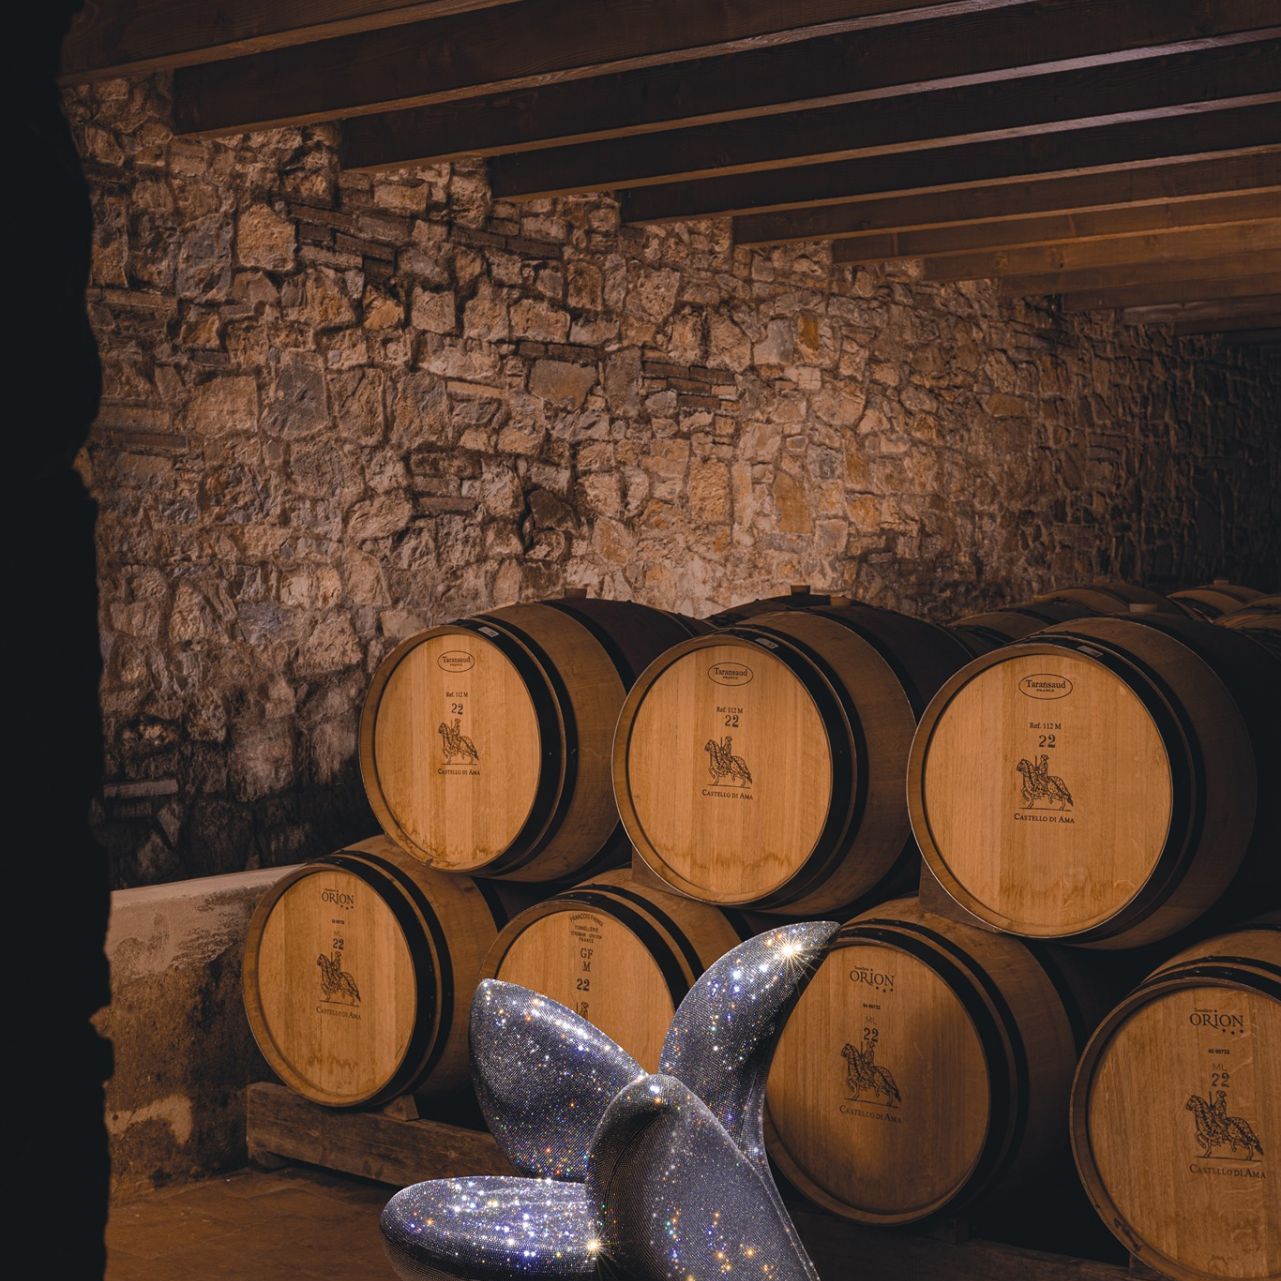   Getsuen . Getsuen Diamond Crystallized with Swarovski shines through the barrels that keep the precious wine of Castello di Ama. 